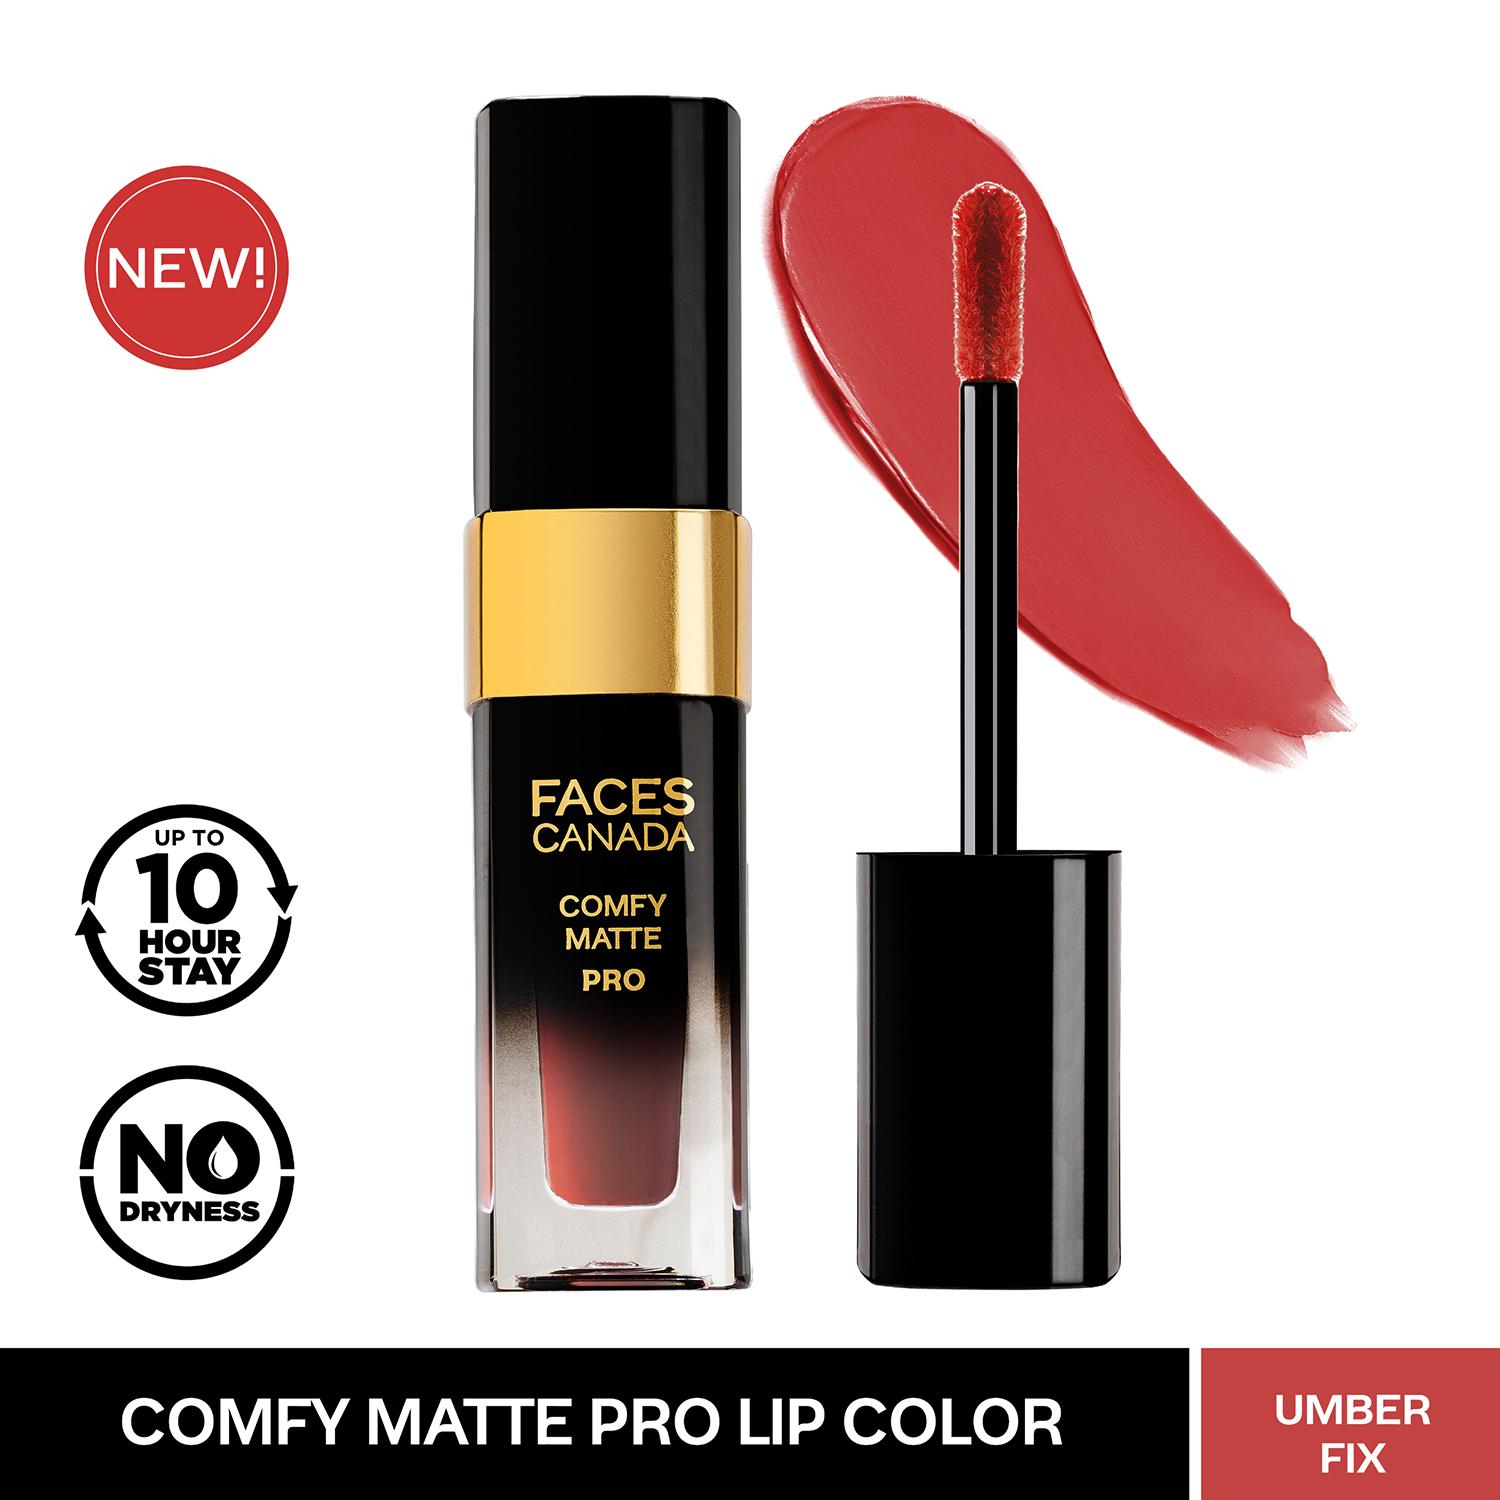 Faces Canada | Faces Canada Comfy Matte Pro Liquid Lipstick - Umber Fix 10, 10HR Stay, No Dryness (5.5 ml)